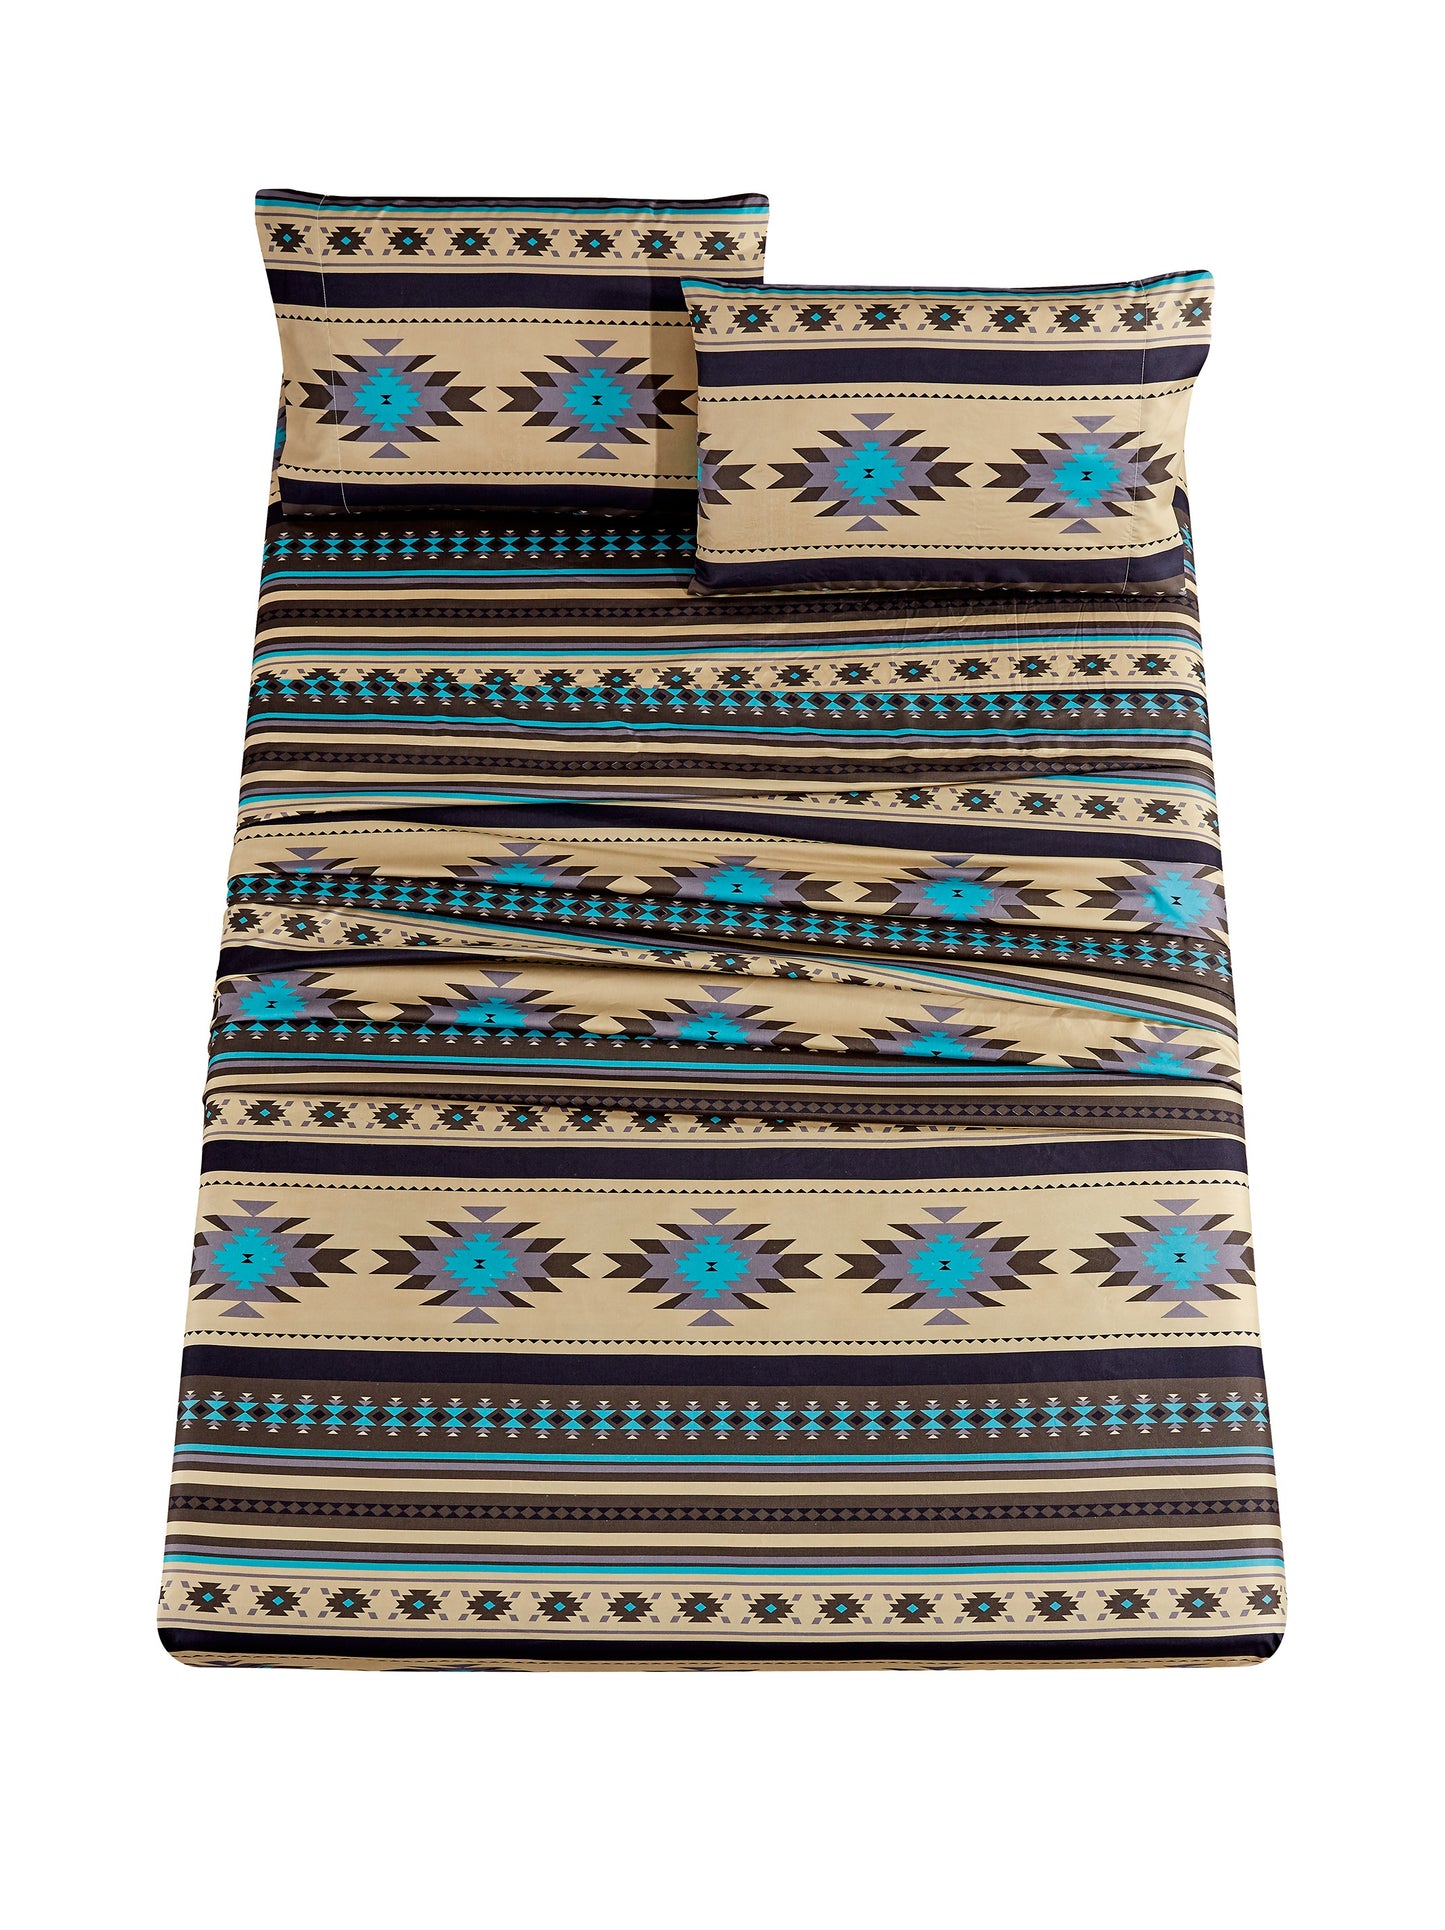 Prescott 4-Piece Southwestern Tribal Multi-Color Sheet Set